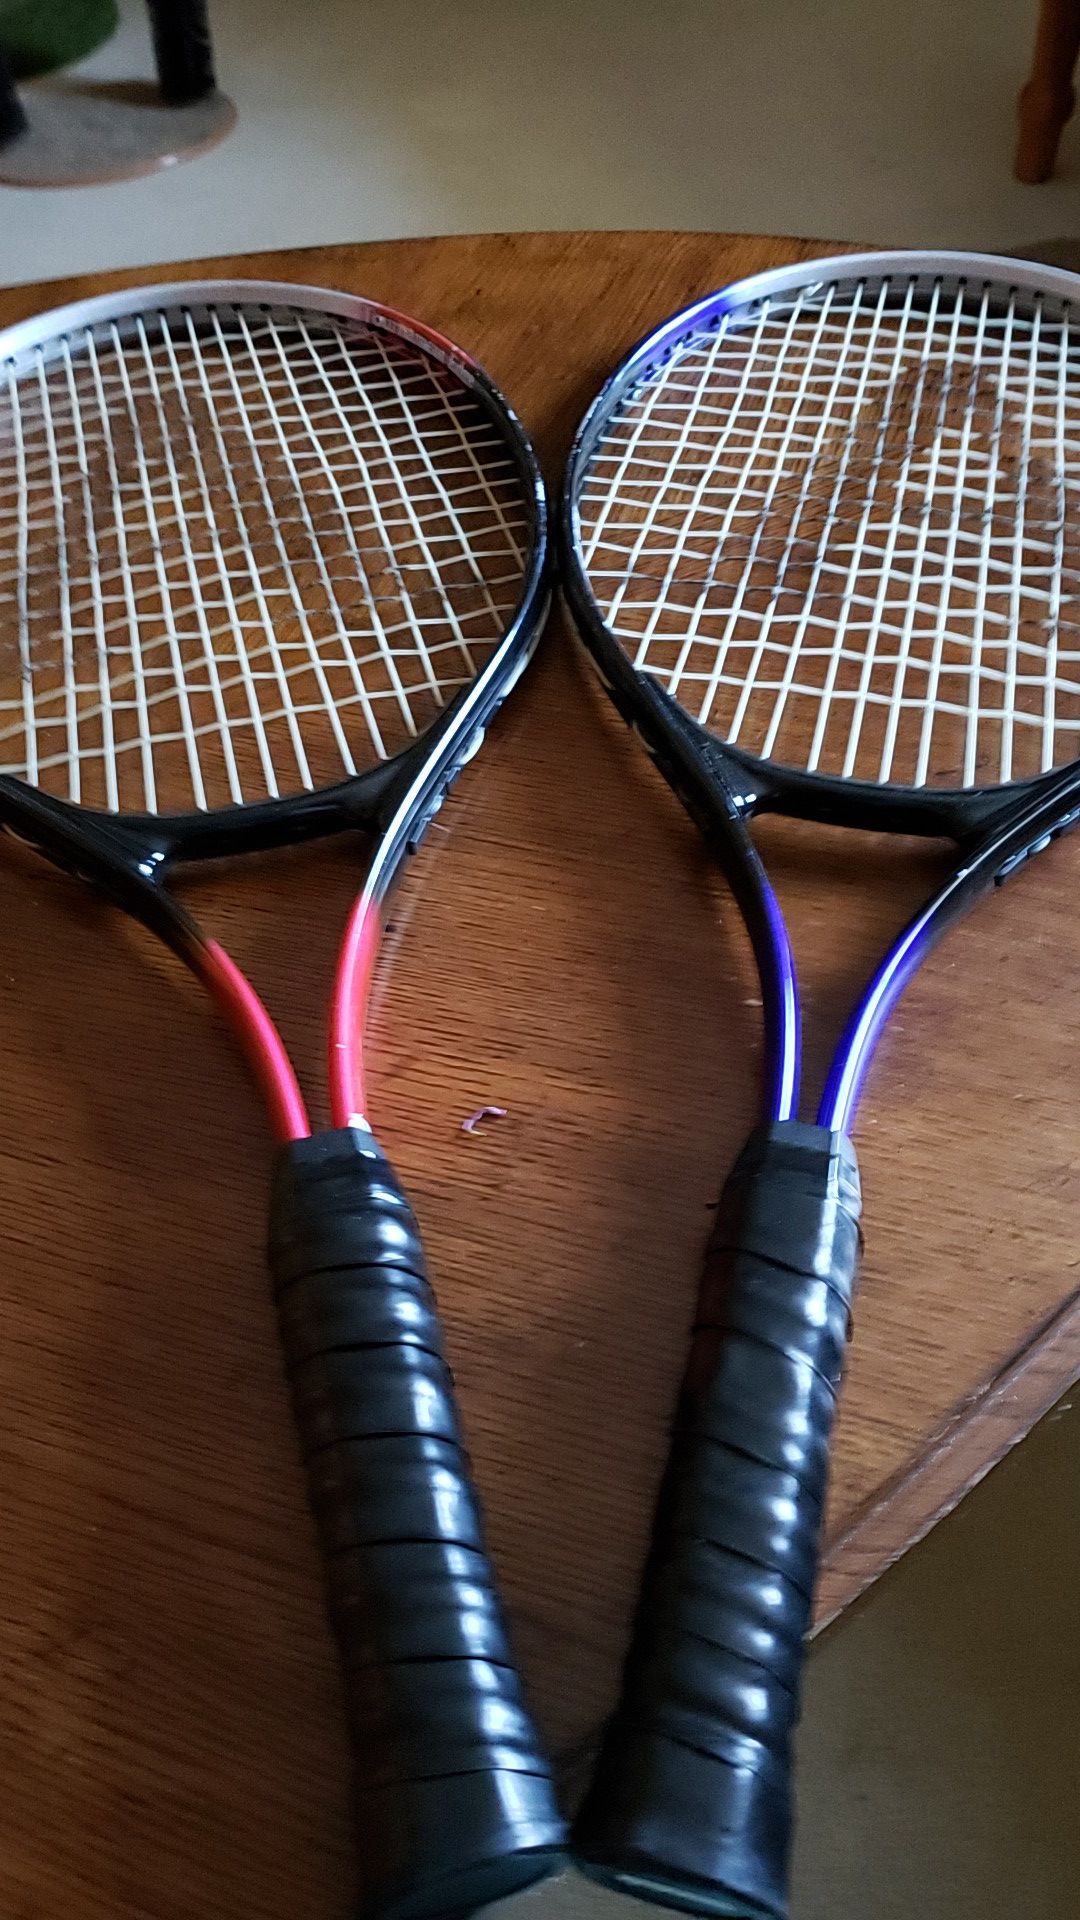 Aero Dynamic Design tennis rackets